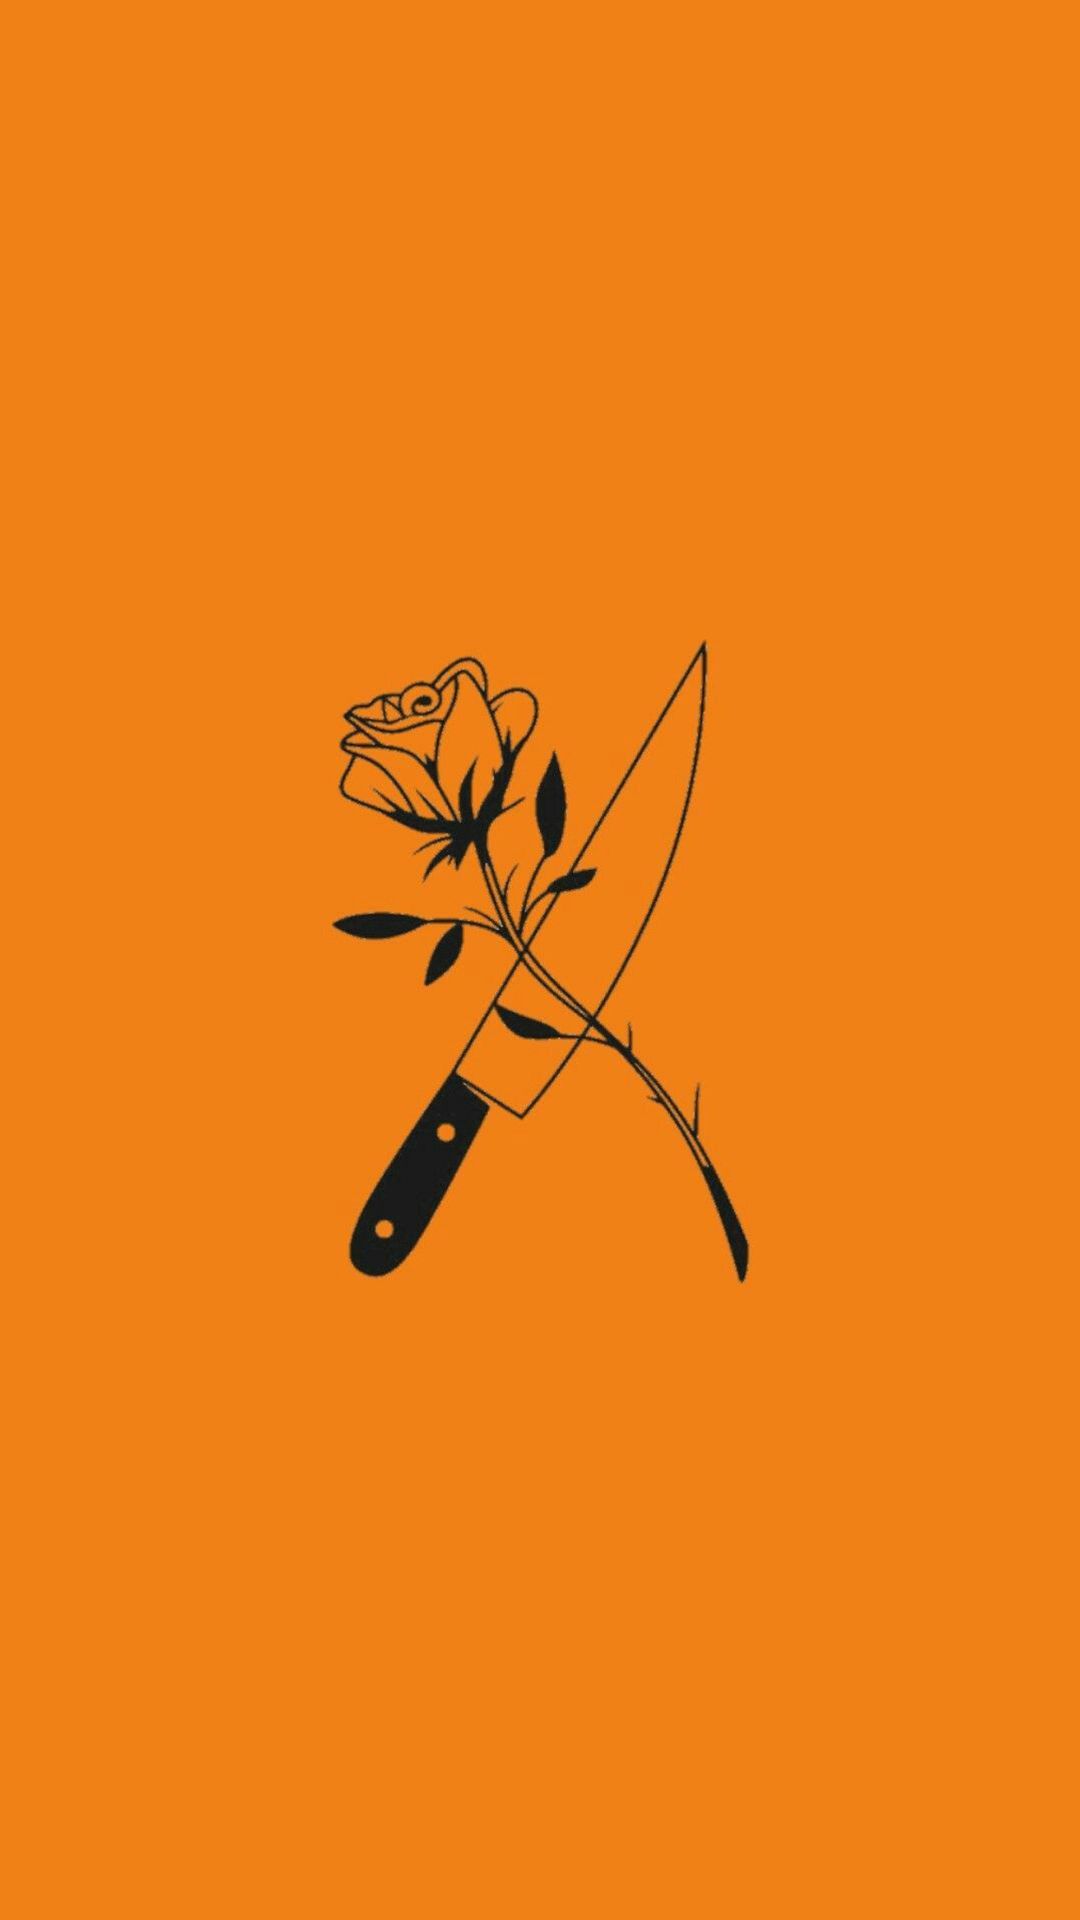 A knife and rose on an orange background - Orange